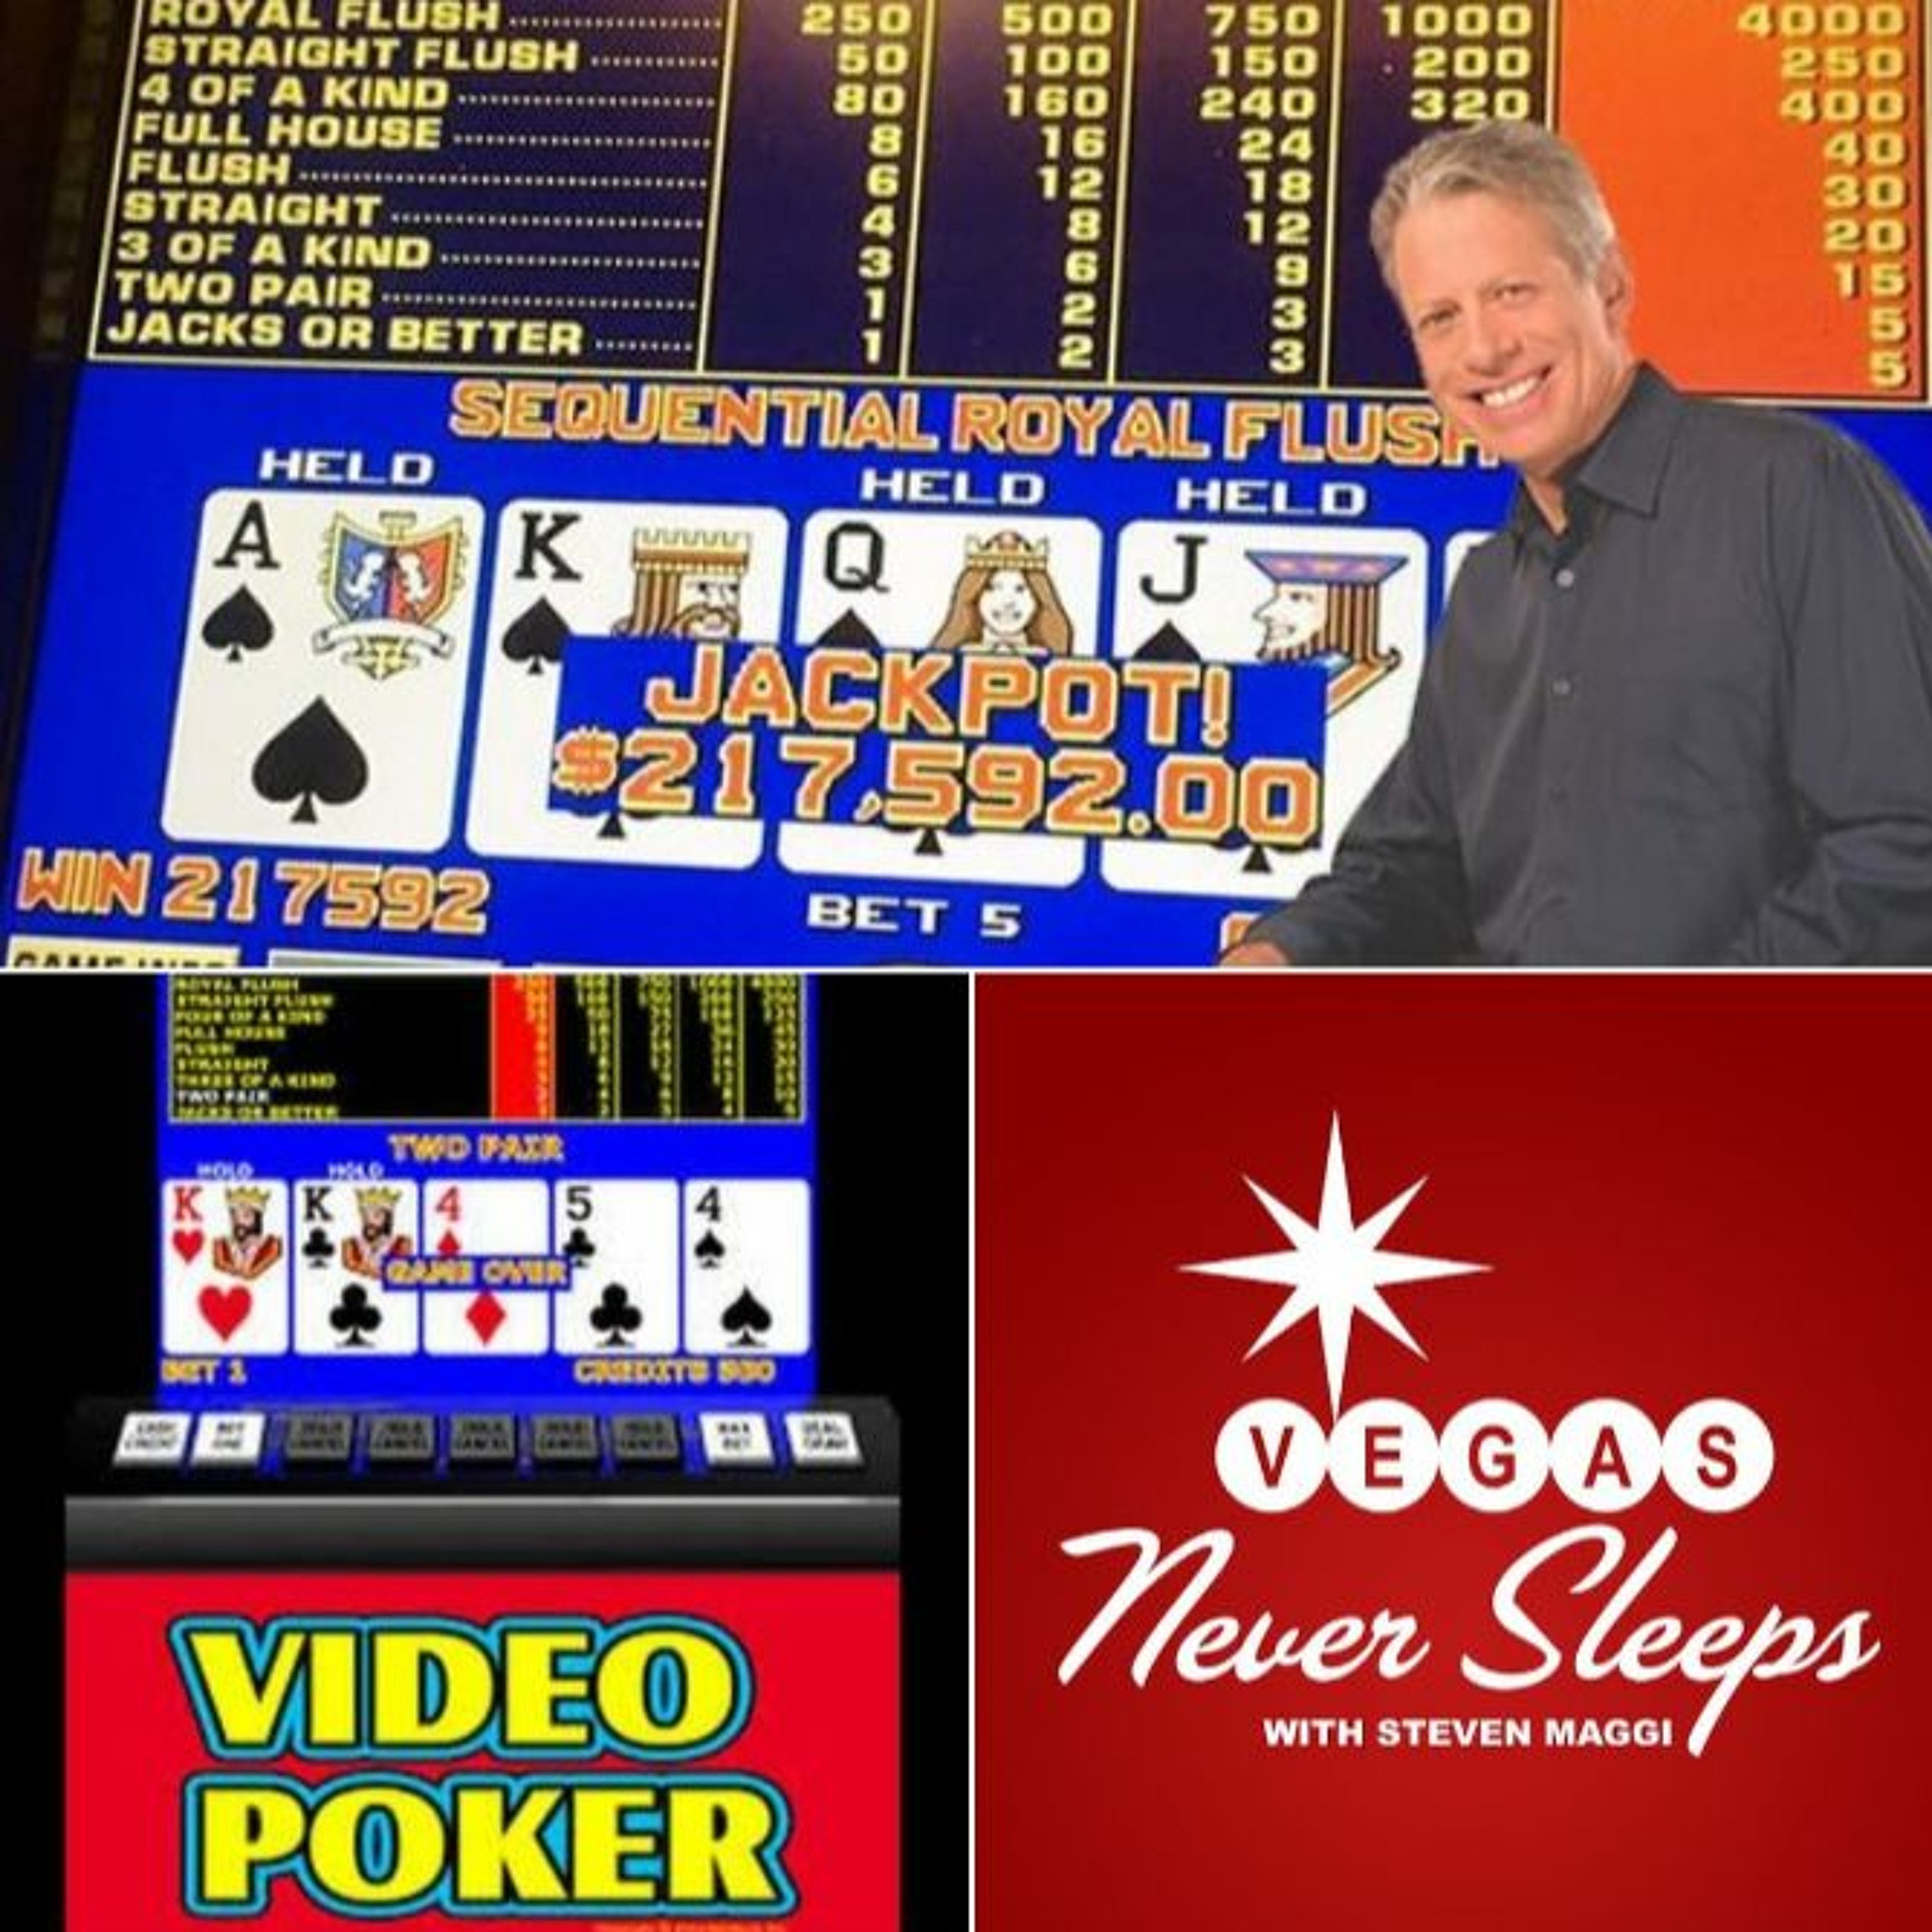 ”Million Dollar Video Poker” - The Complete Bob Dancer Interview